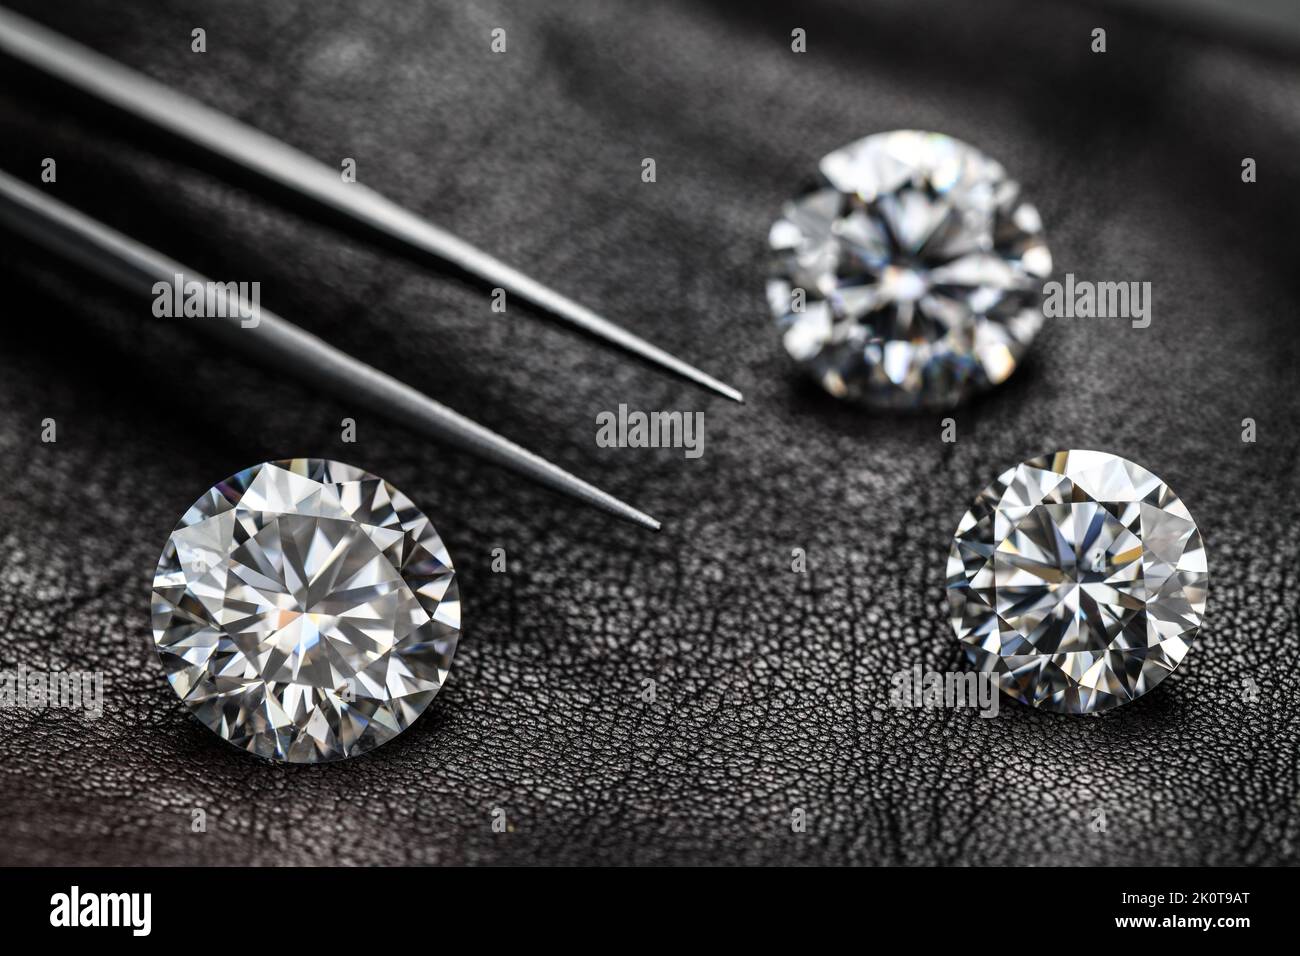 Precious Luxury Diamonds on Brown Leather Stock Photo